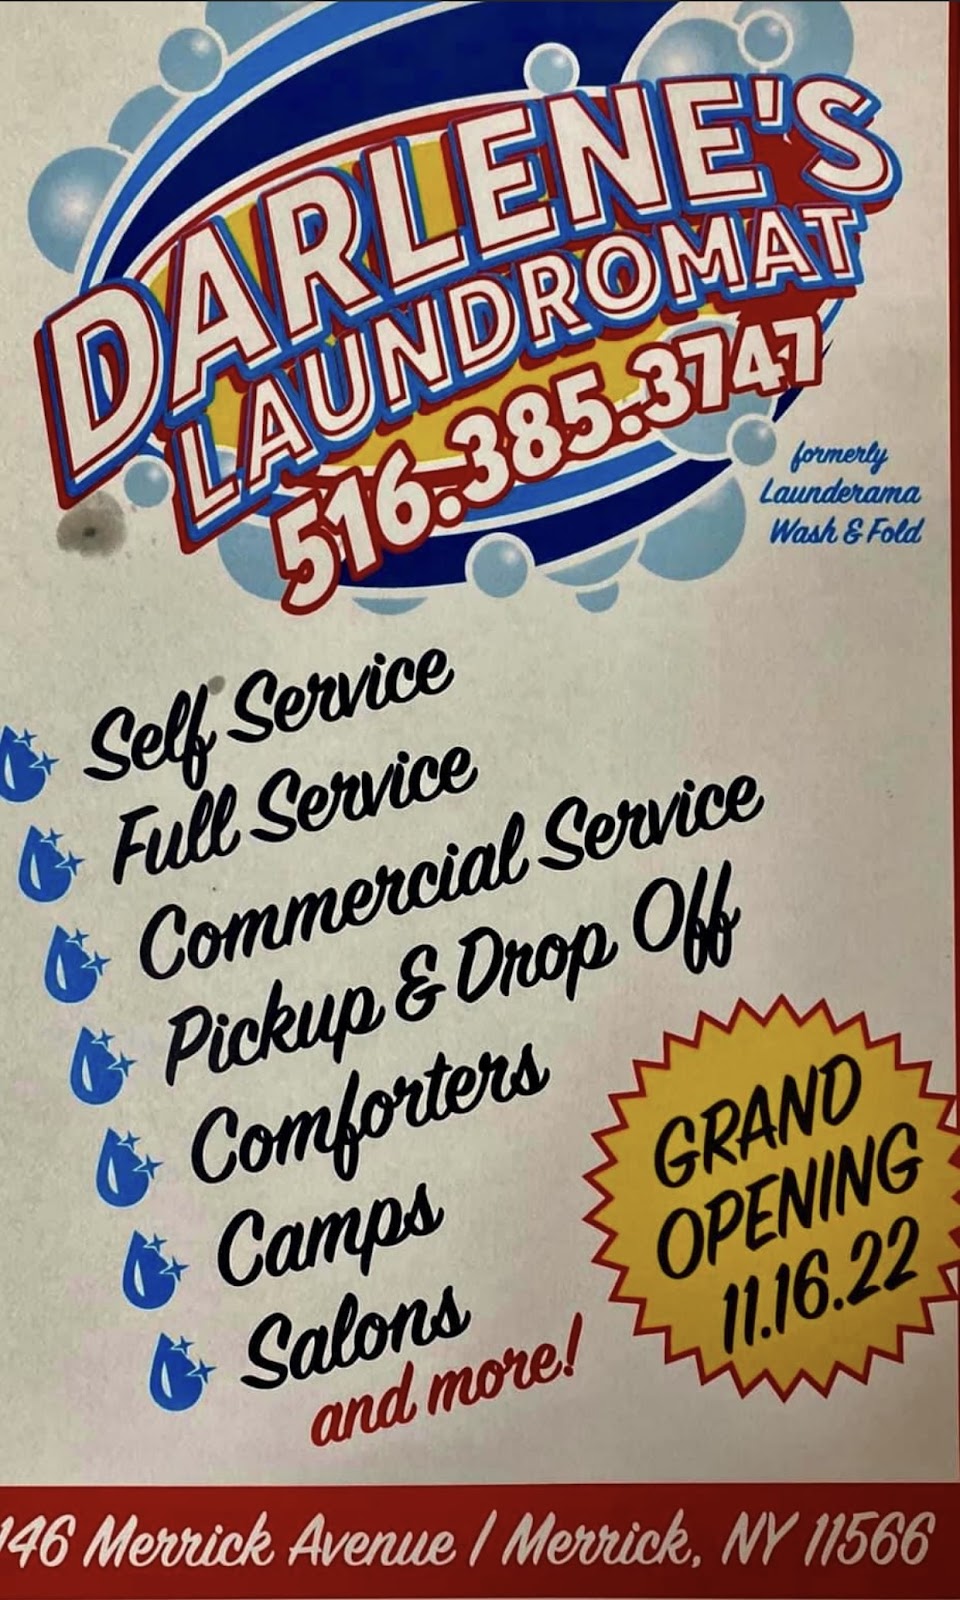 Darlenes Laundromat | 1146 Merrick Ave, Merrick, NY 11566 | Phone: (516) 385-3747